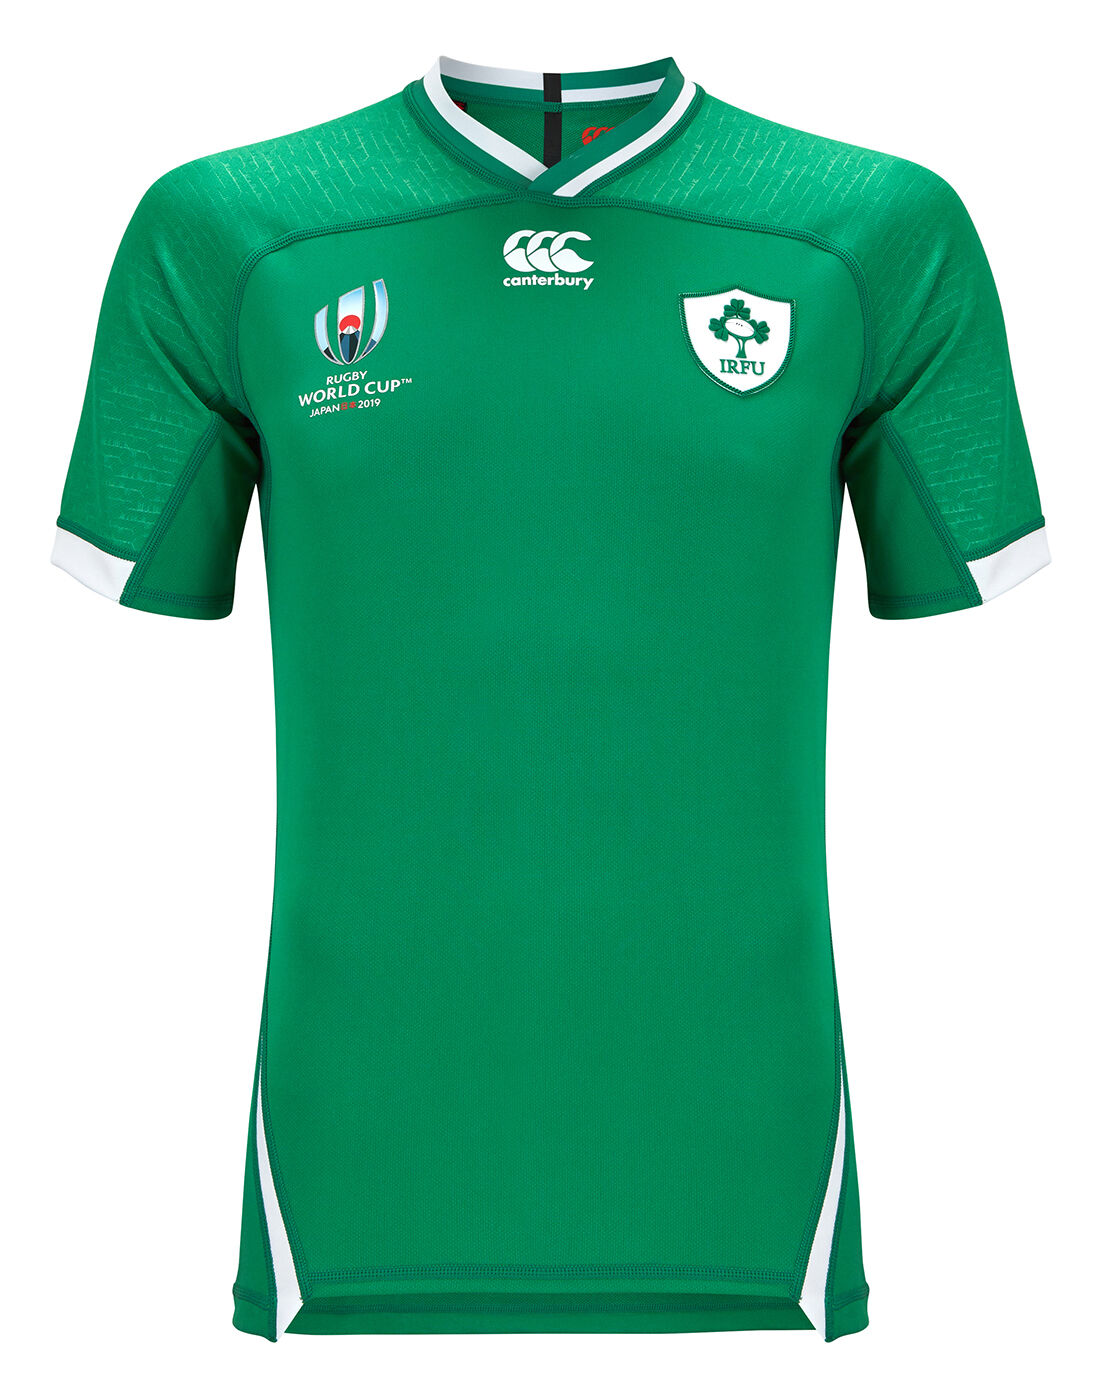 irish rugby jersey